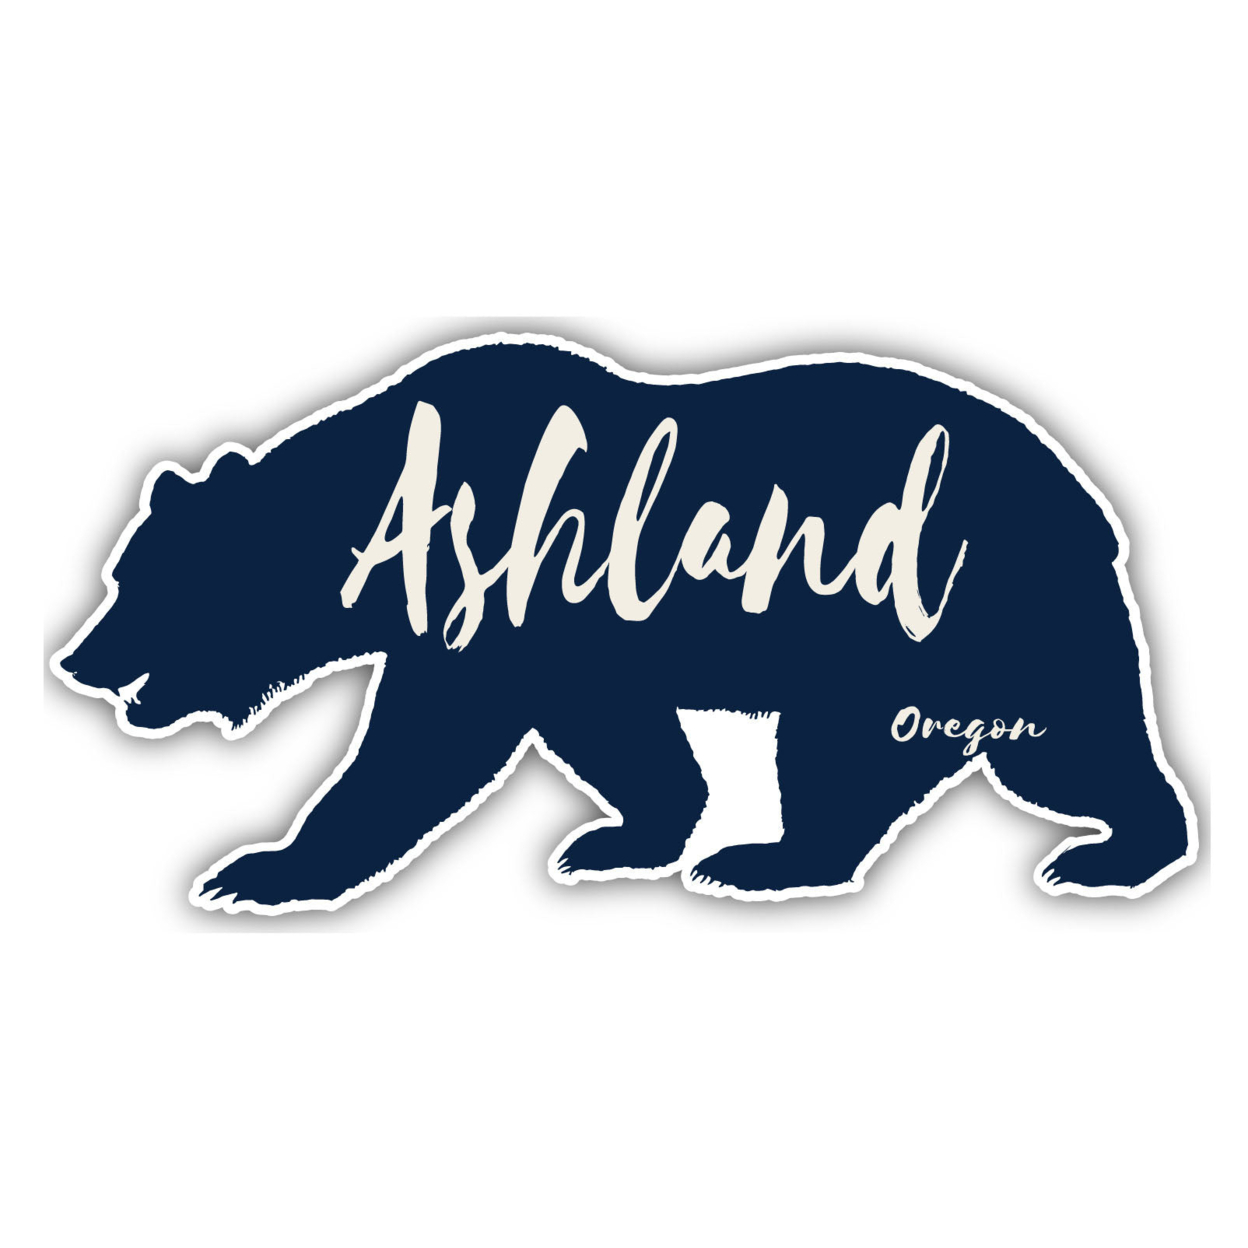 Ashland Oregon Souvenir Decorative Stickers (Choose Theme And Size) - Single Unit, 6-Inch, Tent